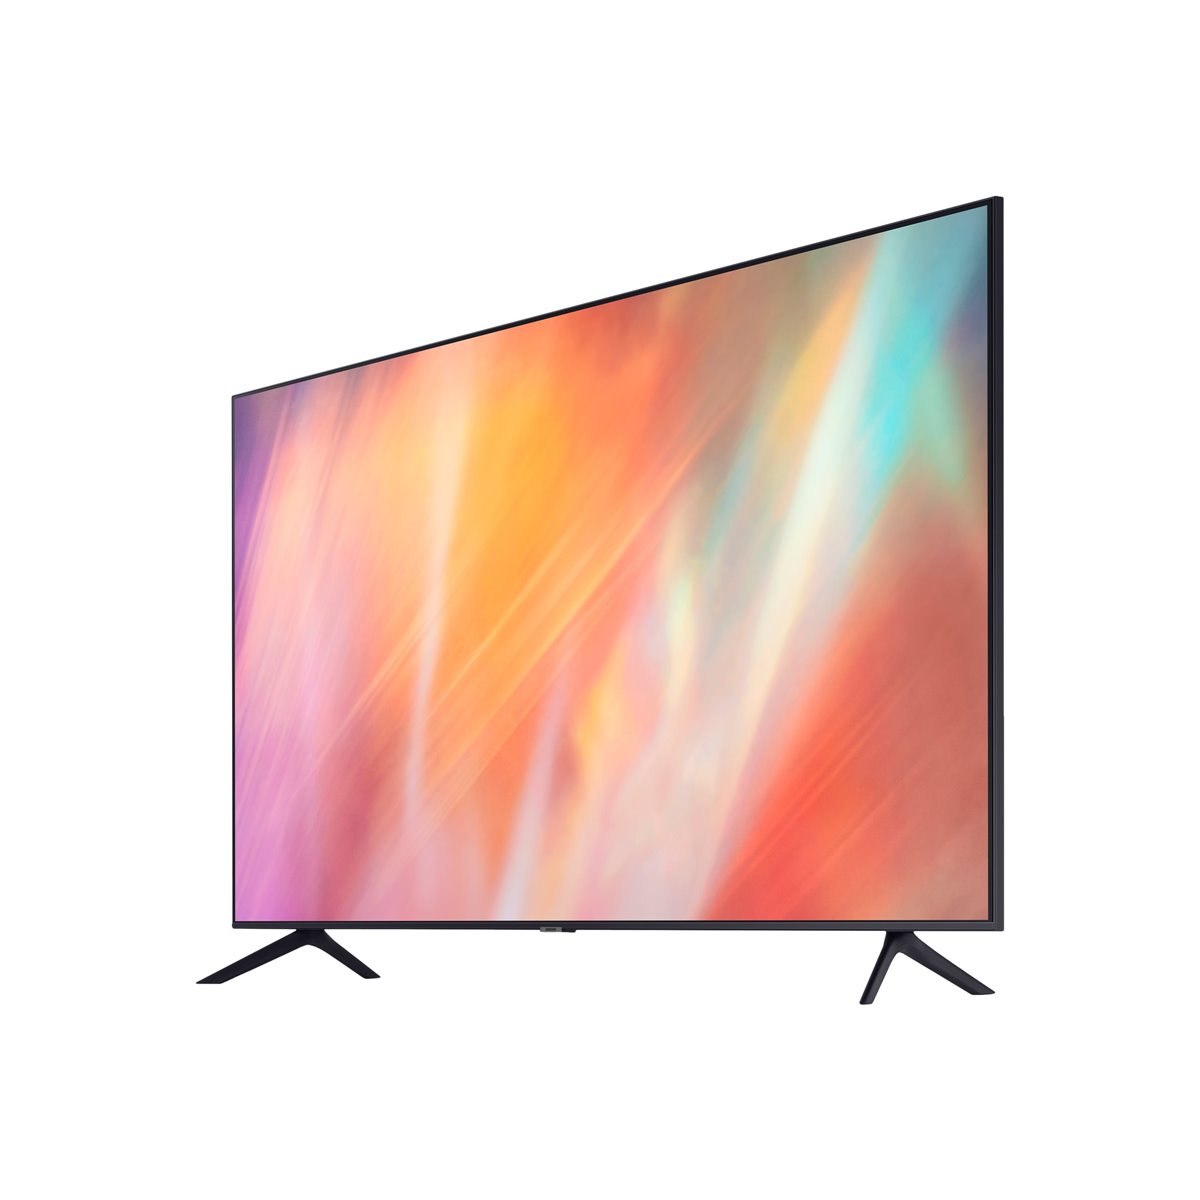 Samsung Business TV BEA-H Serie - 65 - Digital signage flat panel - 165.1 cm (65) - 3840 x 2160 pixels - Wi-Fi